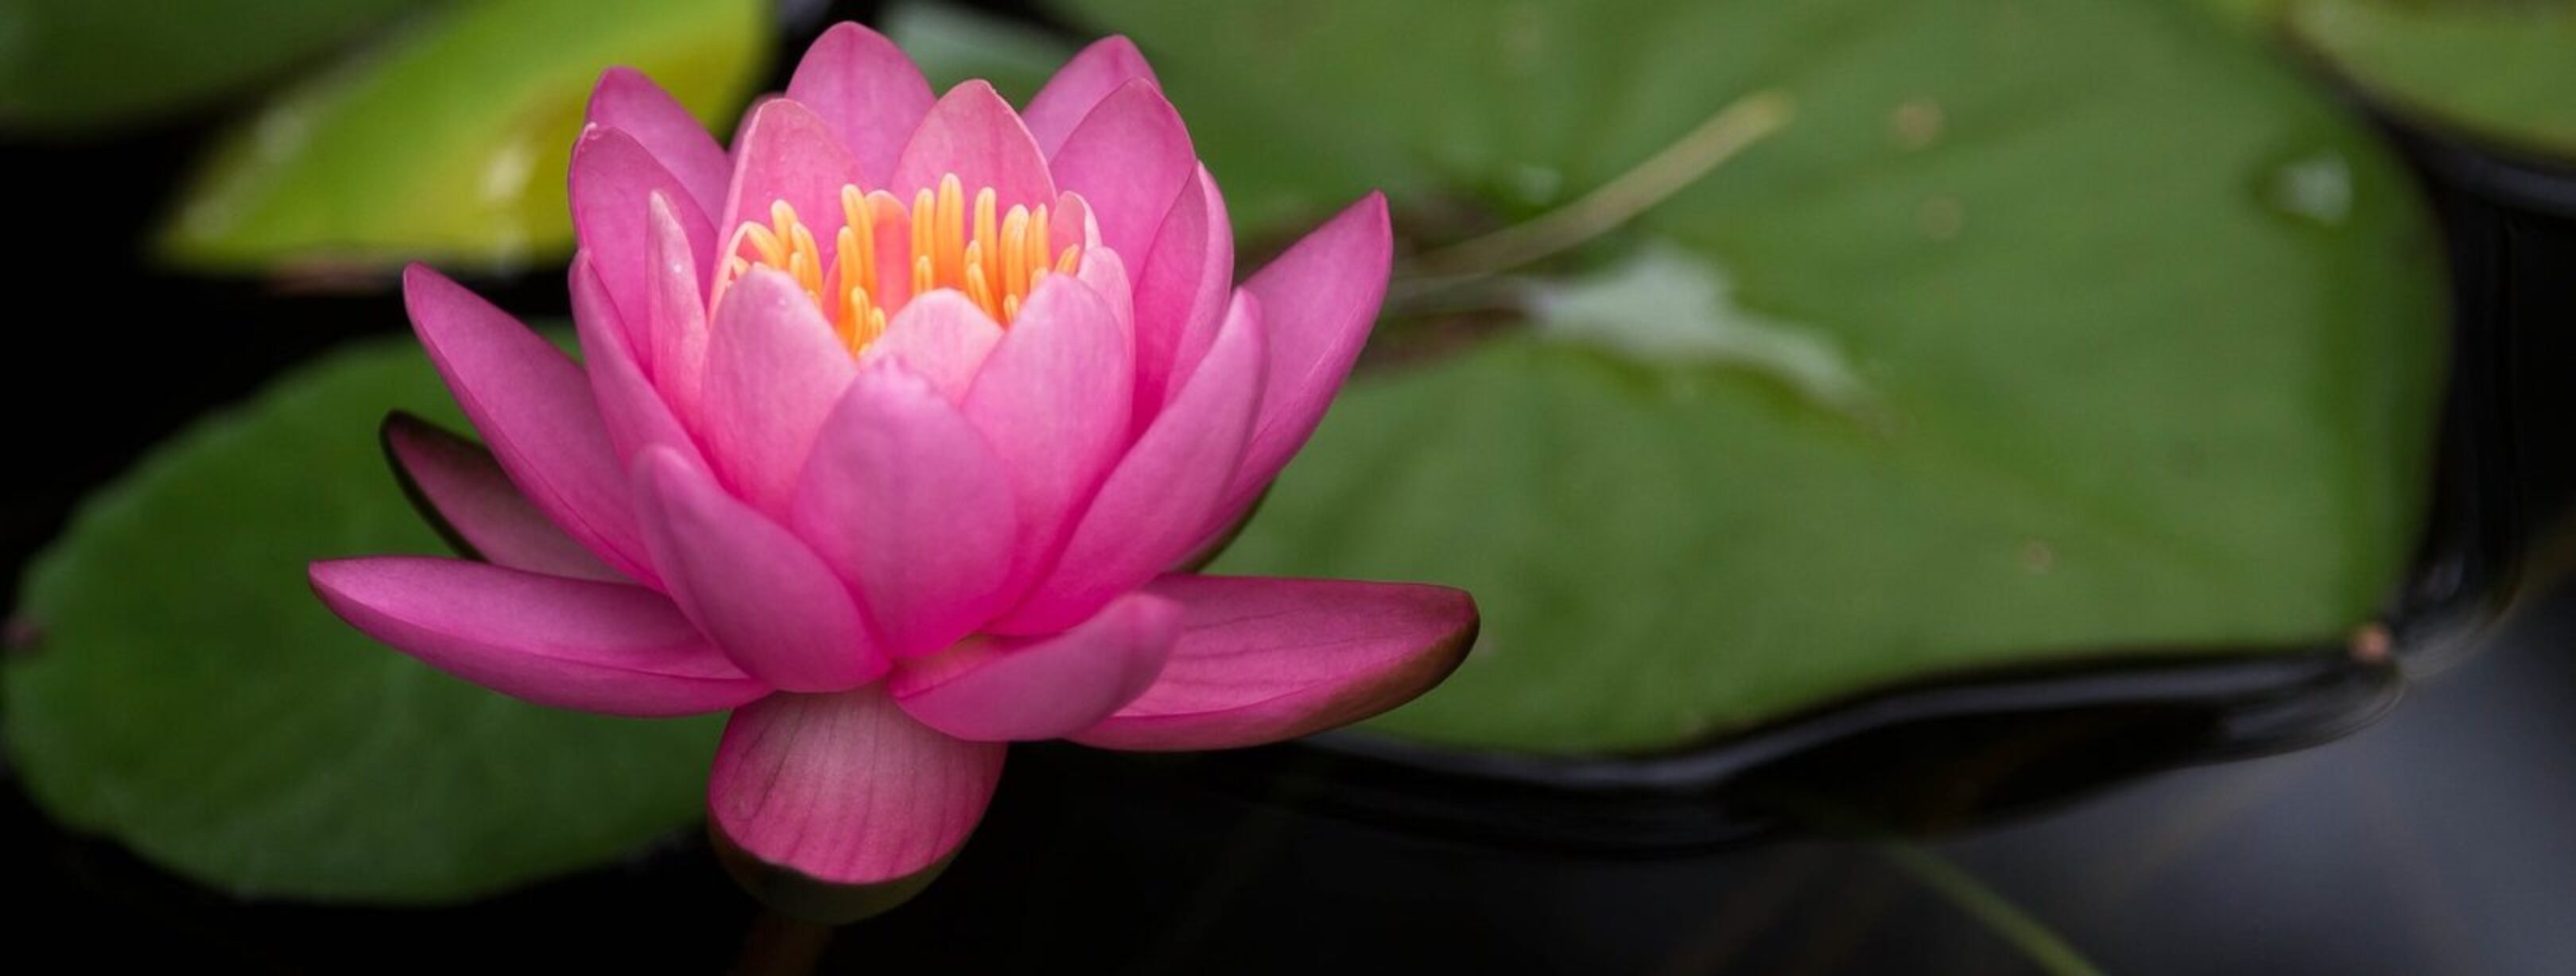 1620-Lotus flower by Jeremy Sorrells via Flickr